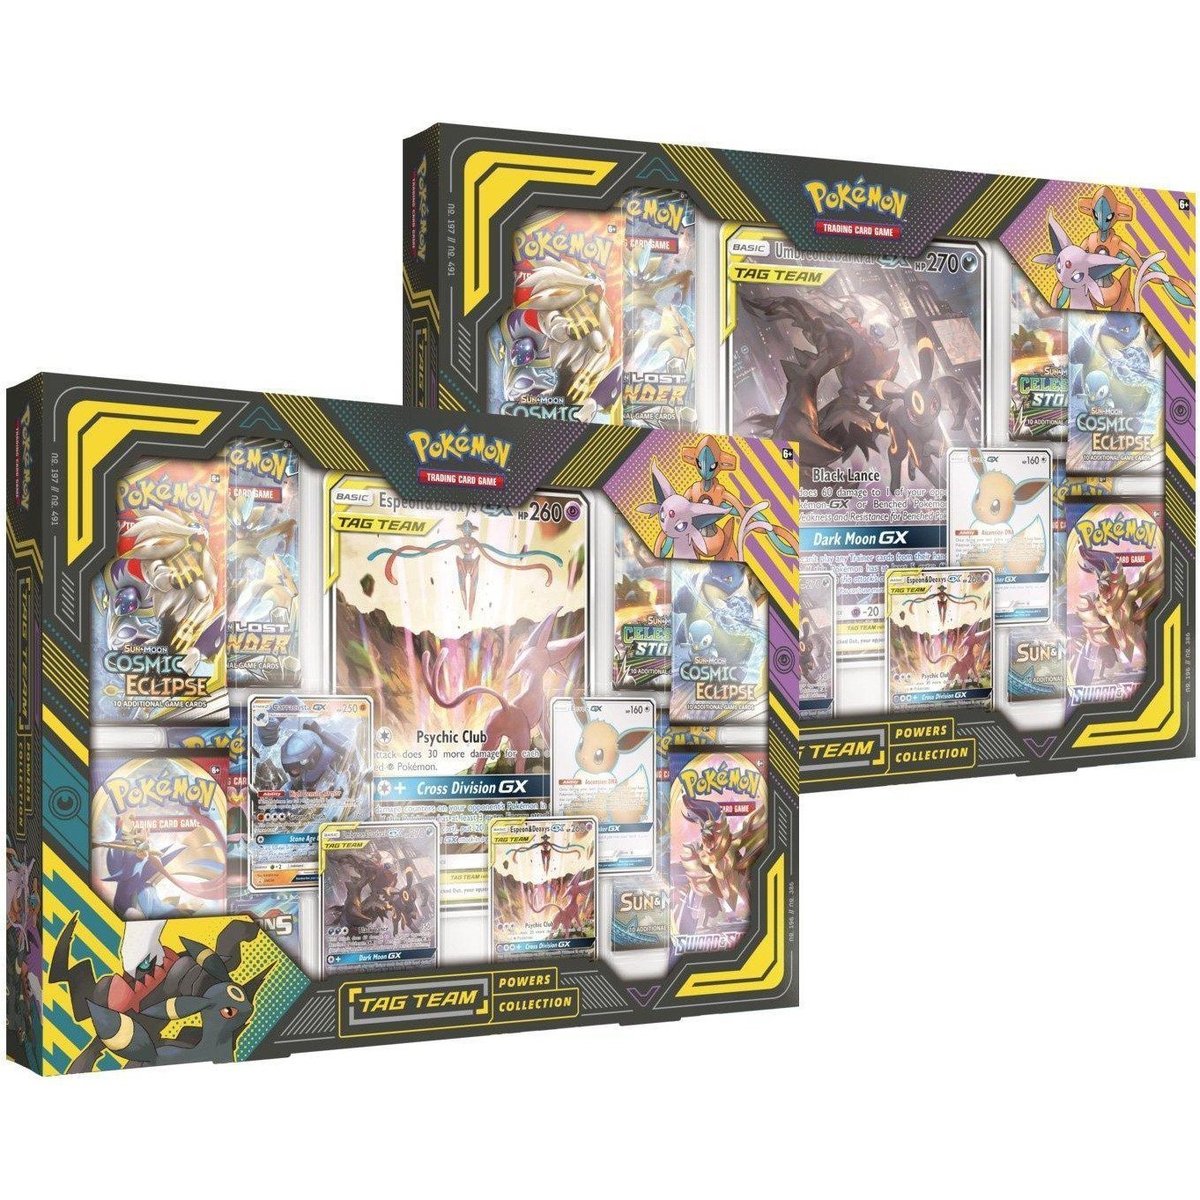 Pokémon TCG: TAG TEAM Powers Collection-Espeon &amp; Deoxys GX (Oversize Card)-The Pokémon Company International-Ace Cards &amp; Collectibles